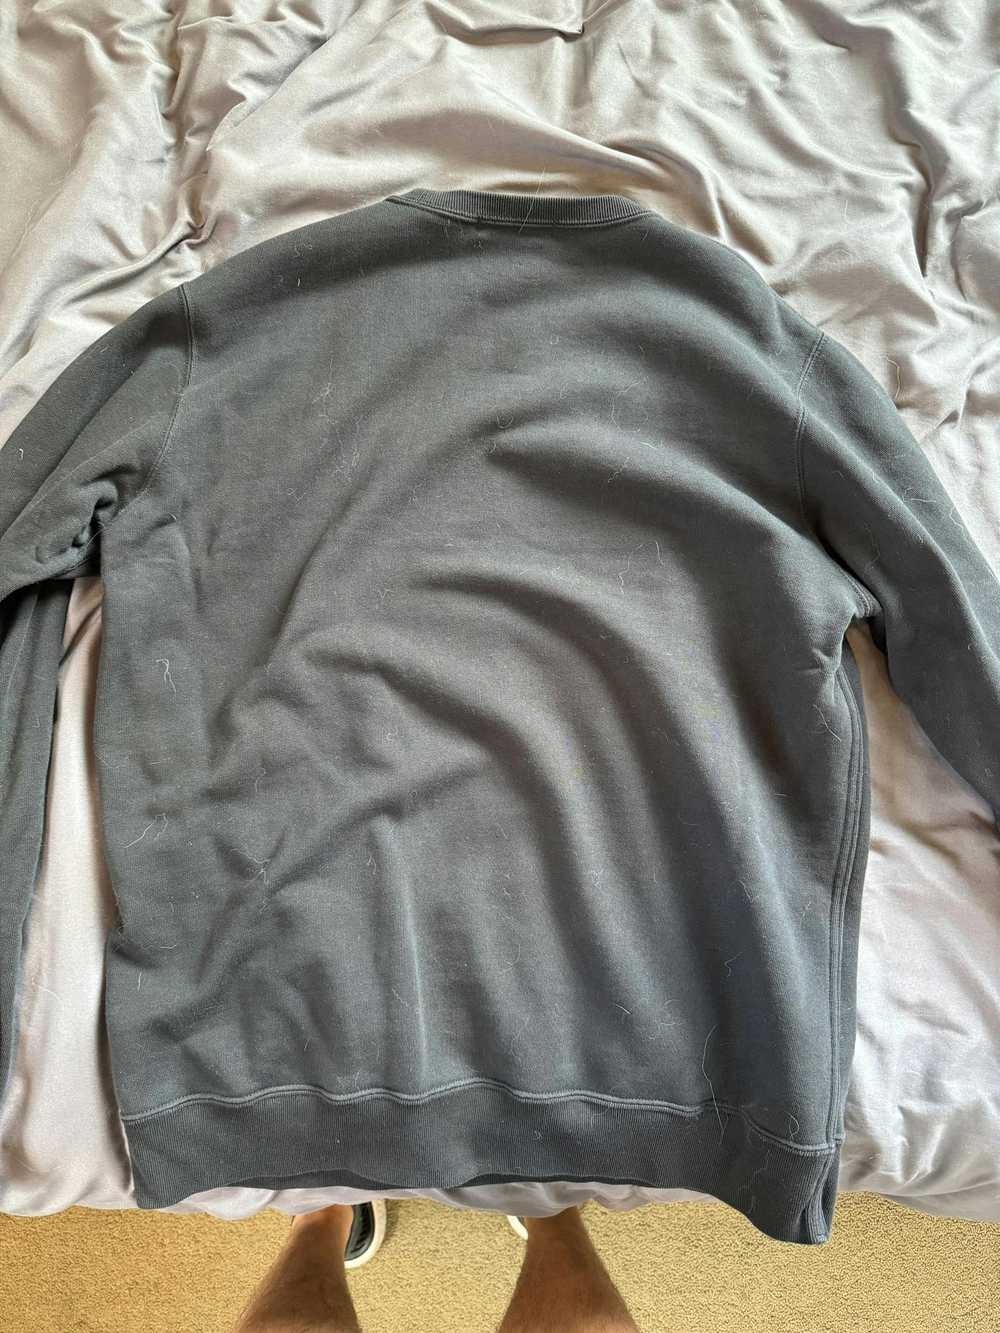 Undercover Undercover "U" Sweatshirt Size M (2) - image 2